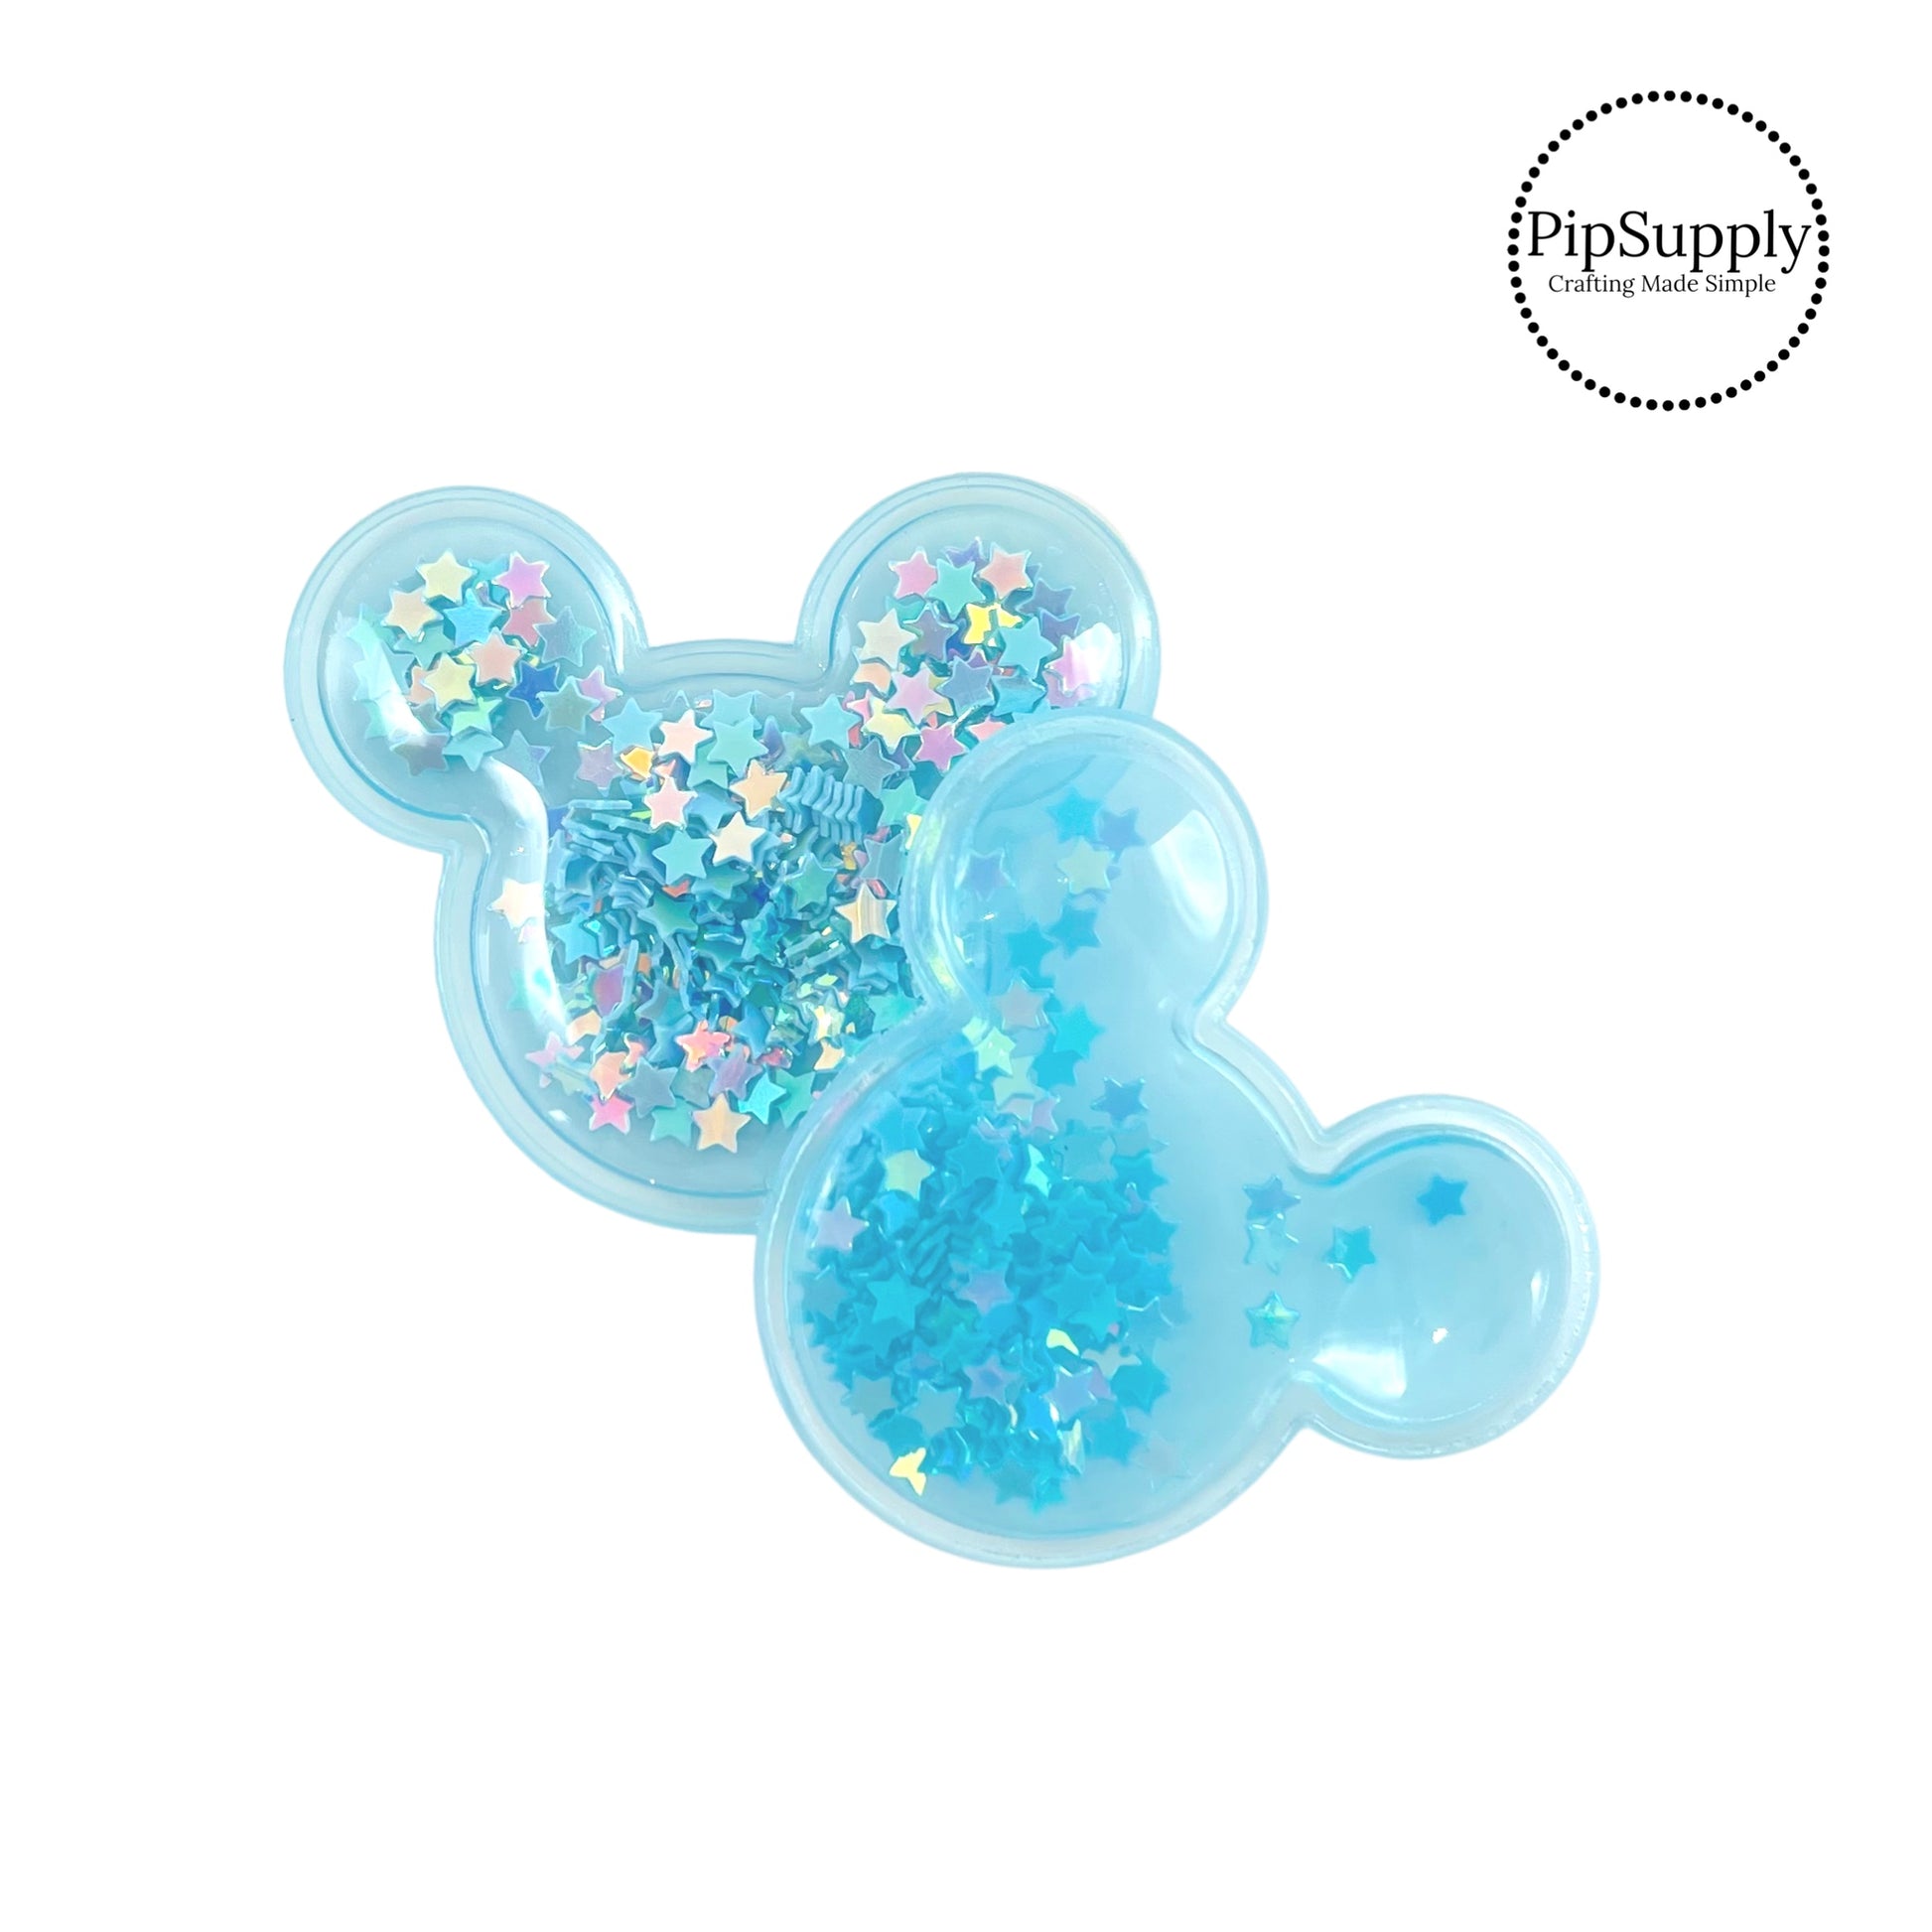 Blue star confetti inside a blue jelly mouse head embellishment